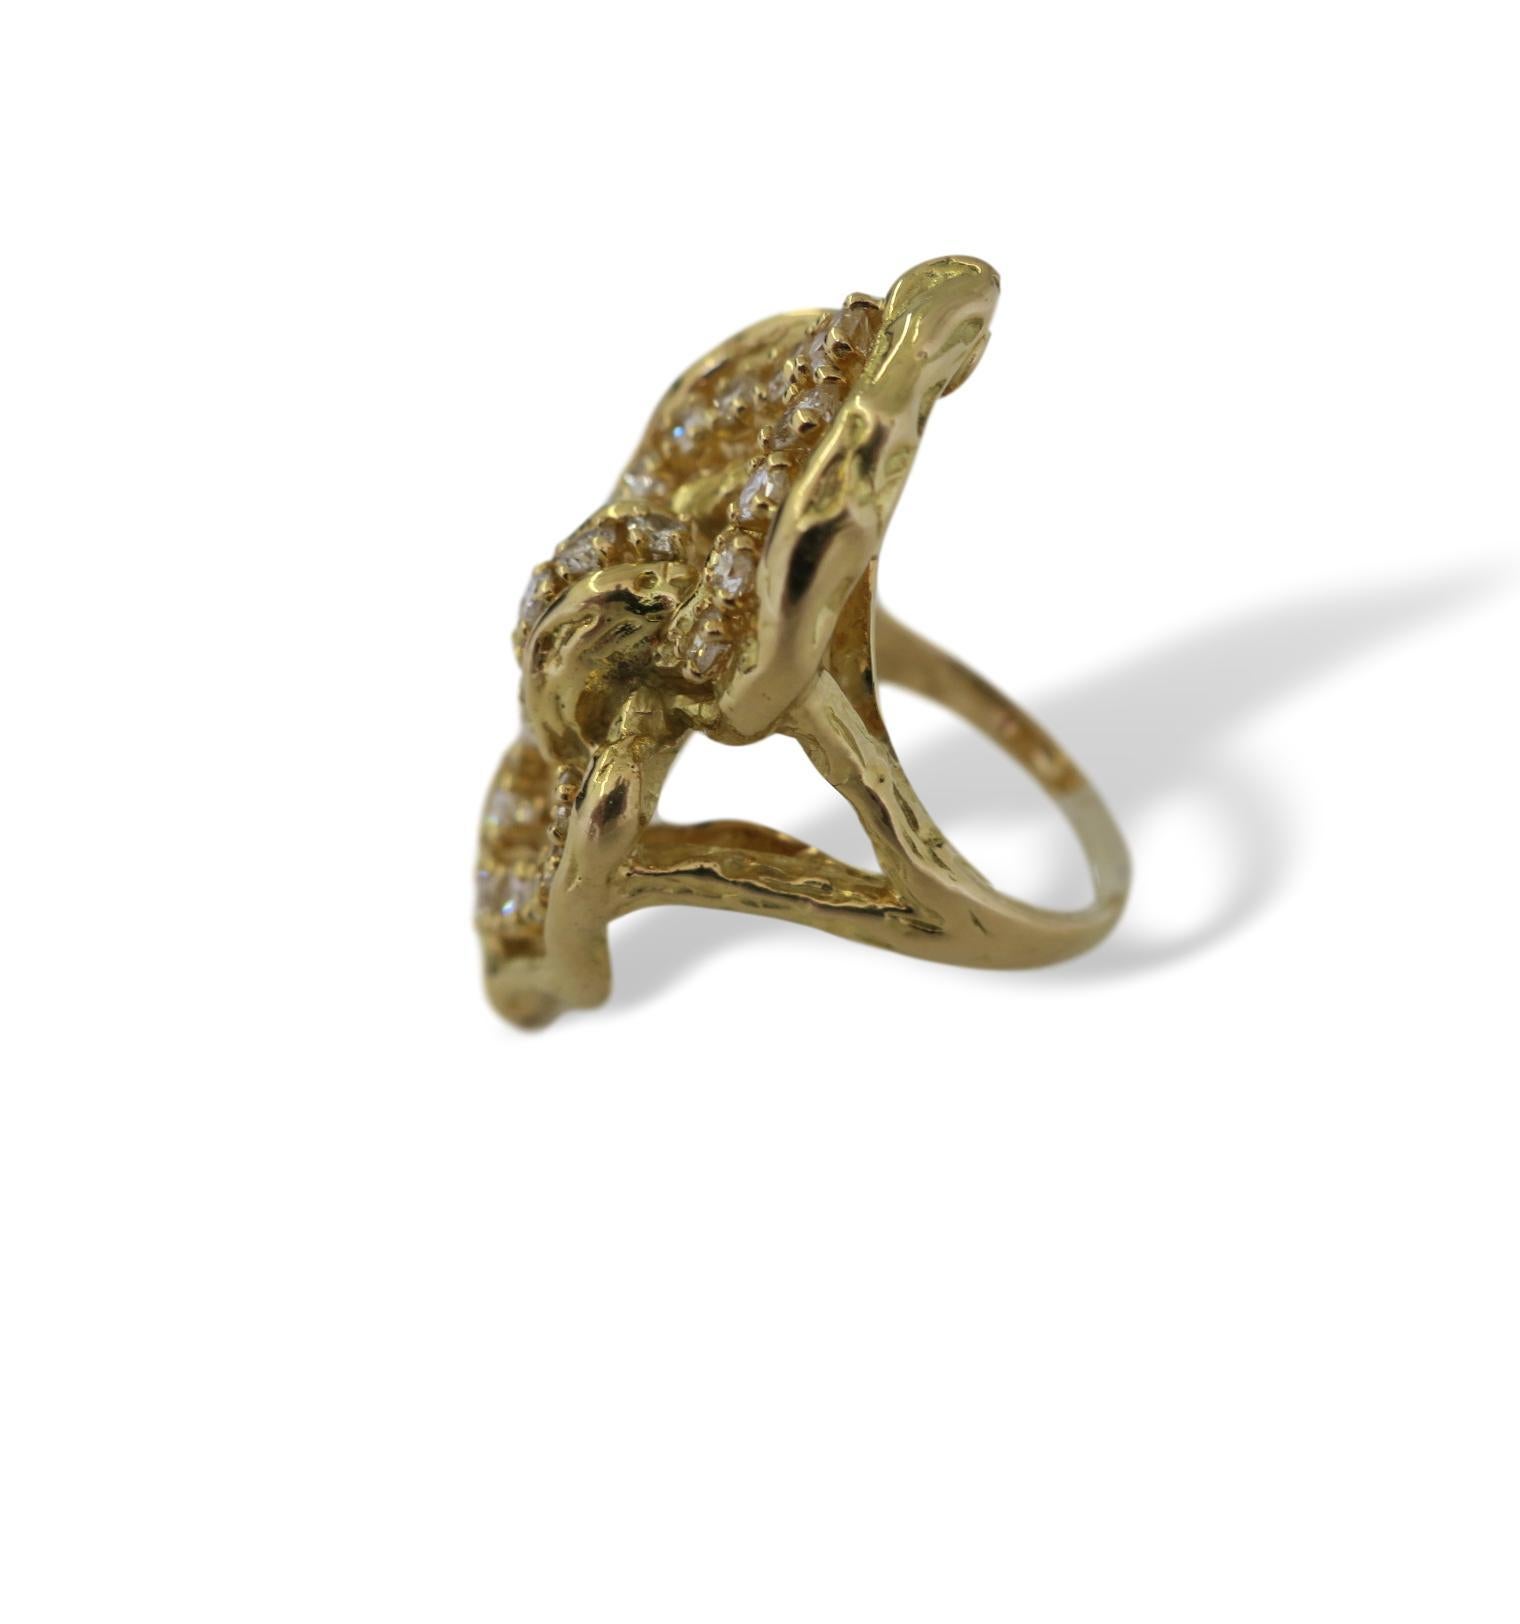 Modernist Vintage Chaumet Paris Diamond and Gold, 1970s Ring